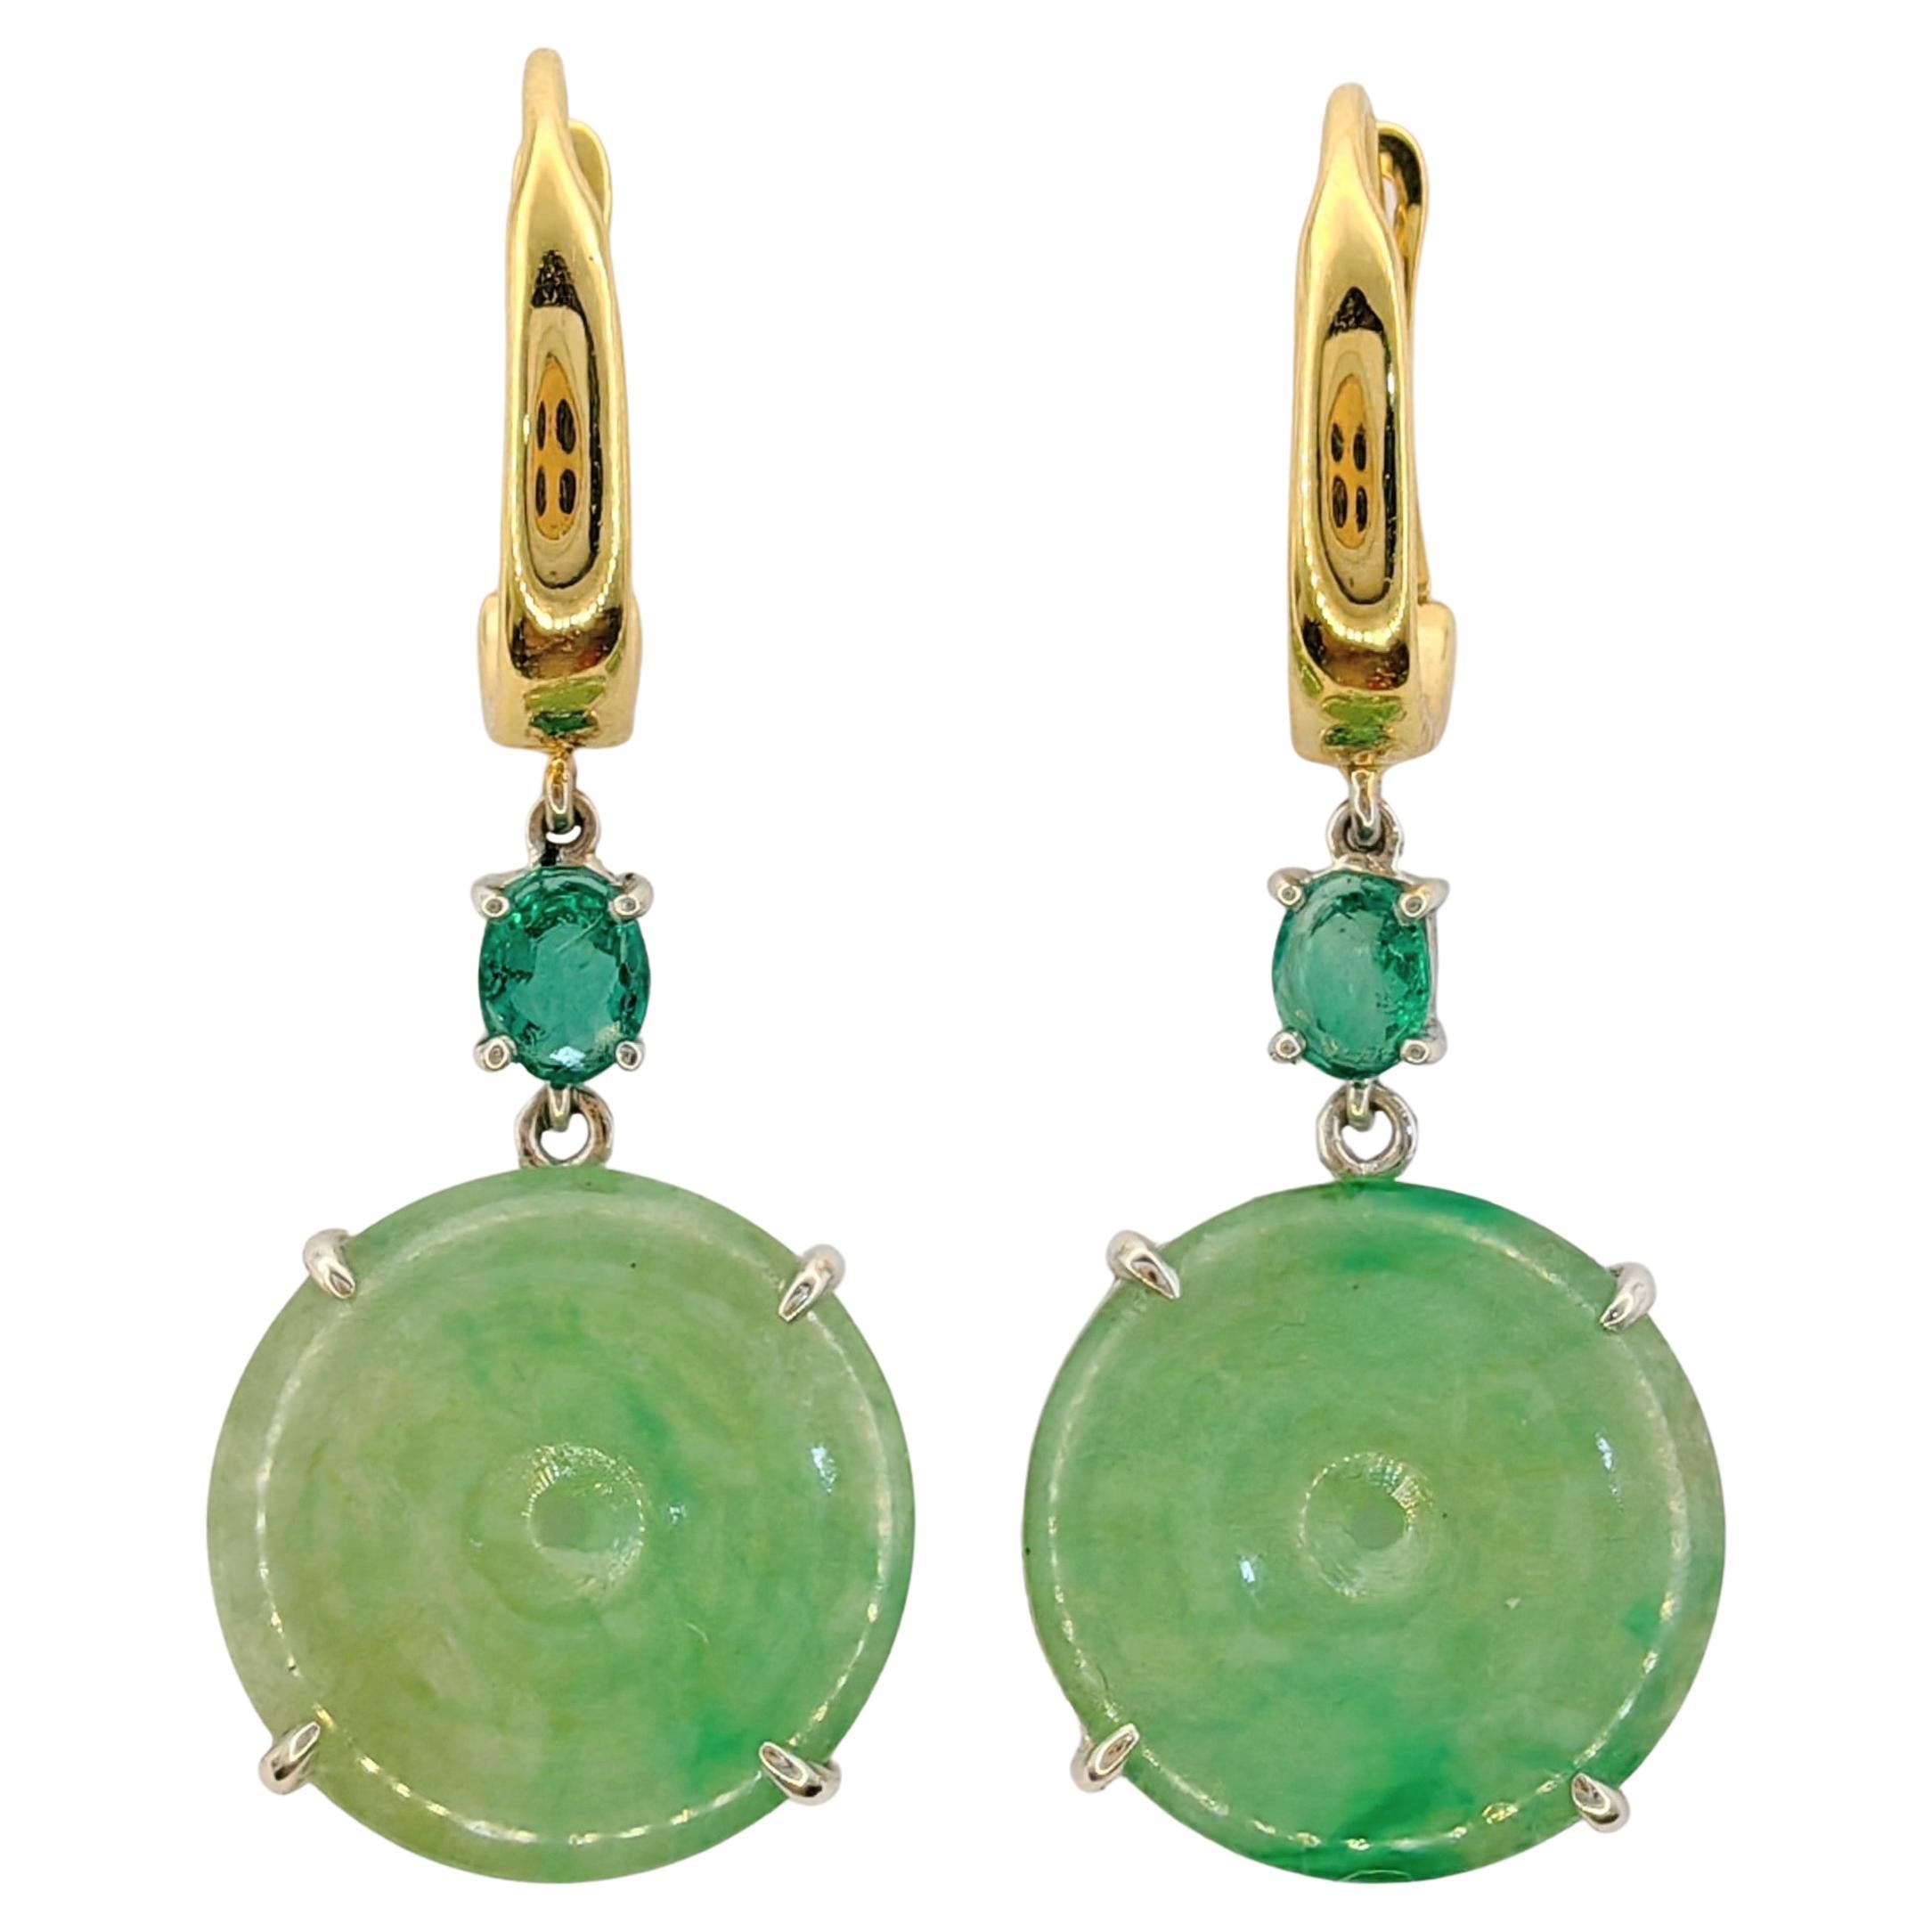 Burmese Jadeite Jade Donut & Emerald Dangling Earrings in 18K Two-tone Gold